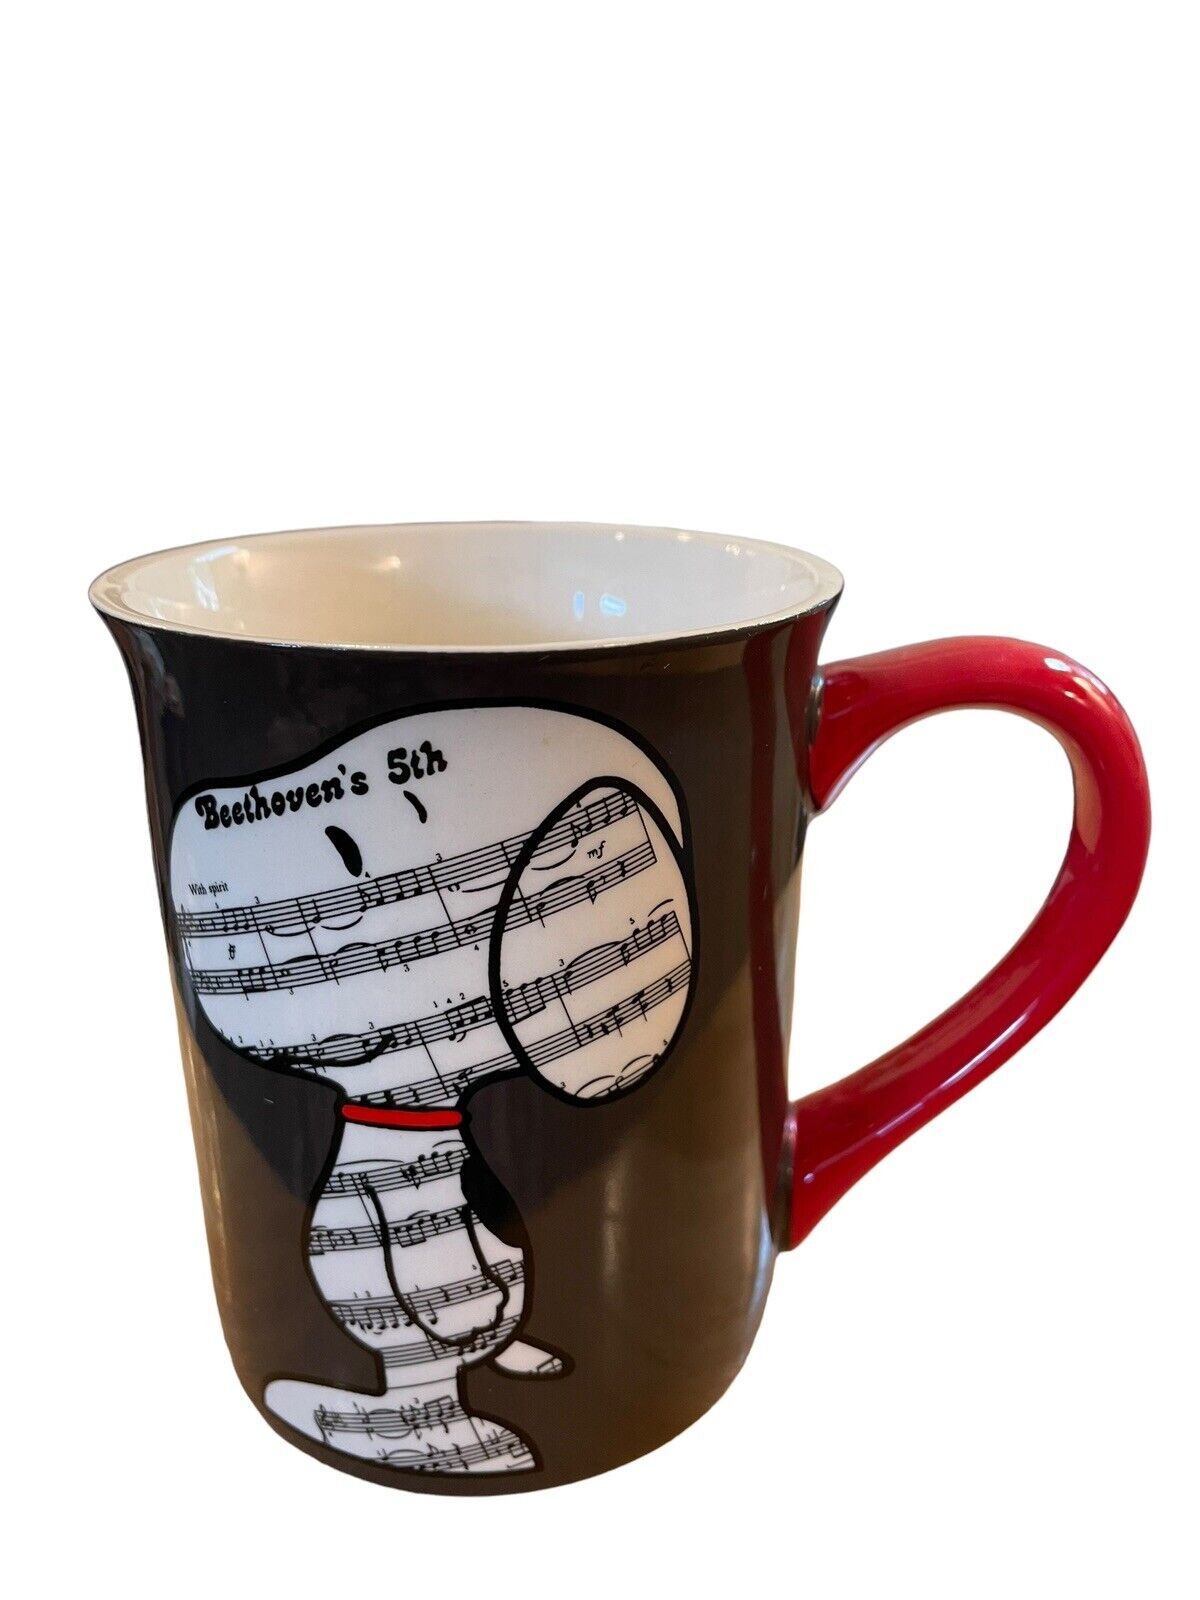 Peanuts Snoopy Musical Mutt Beethoven’s 5th Department 56 Coffee Tea Mug 2014